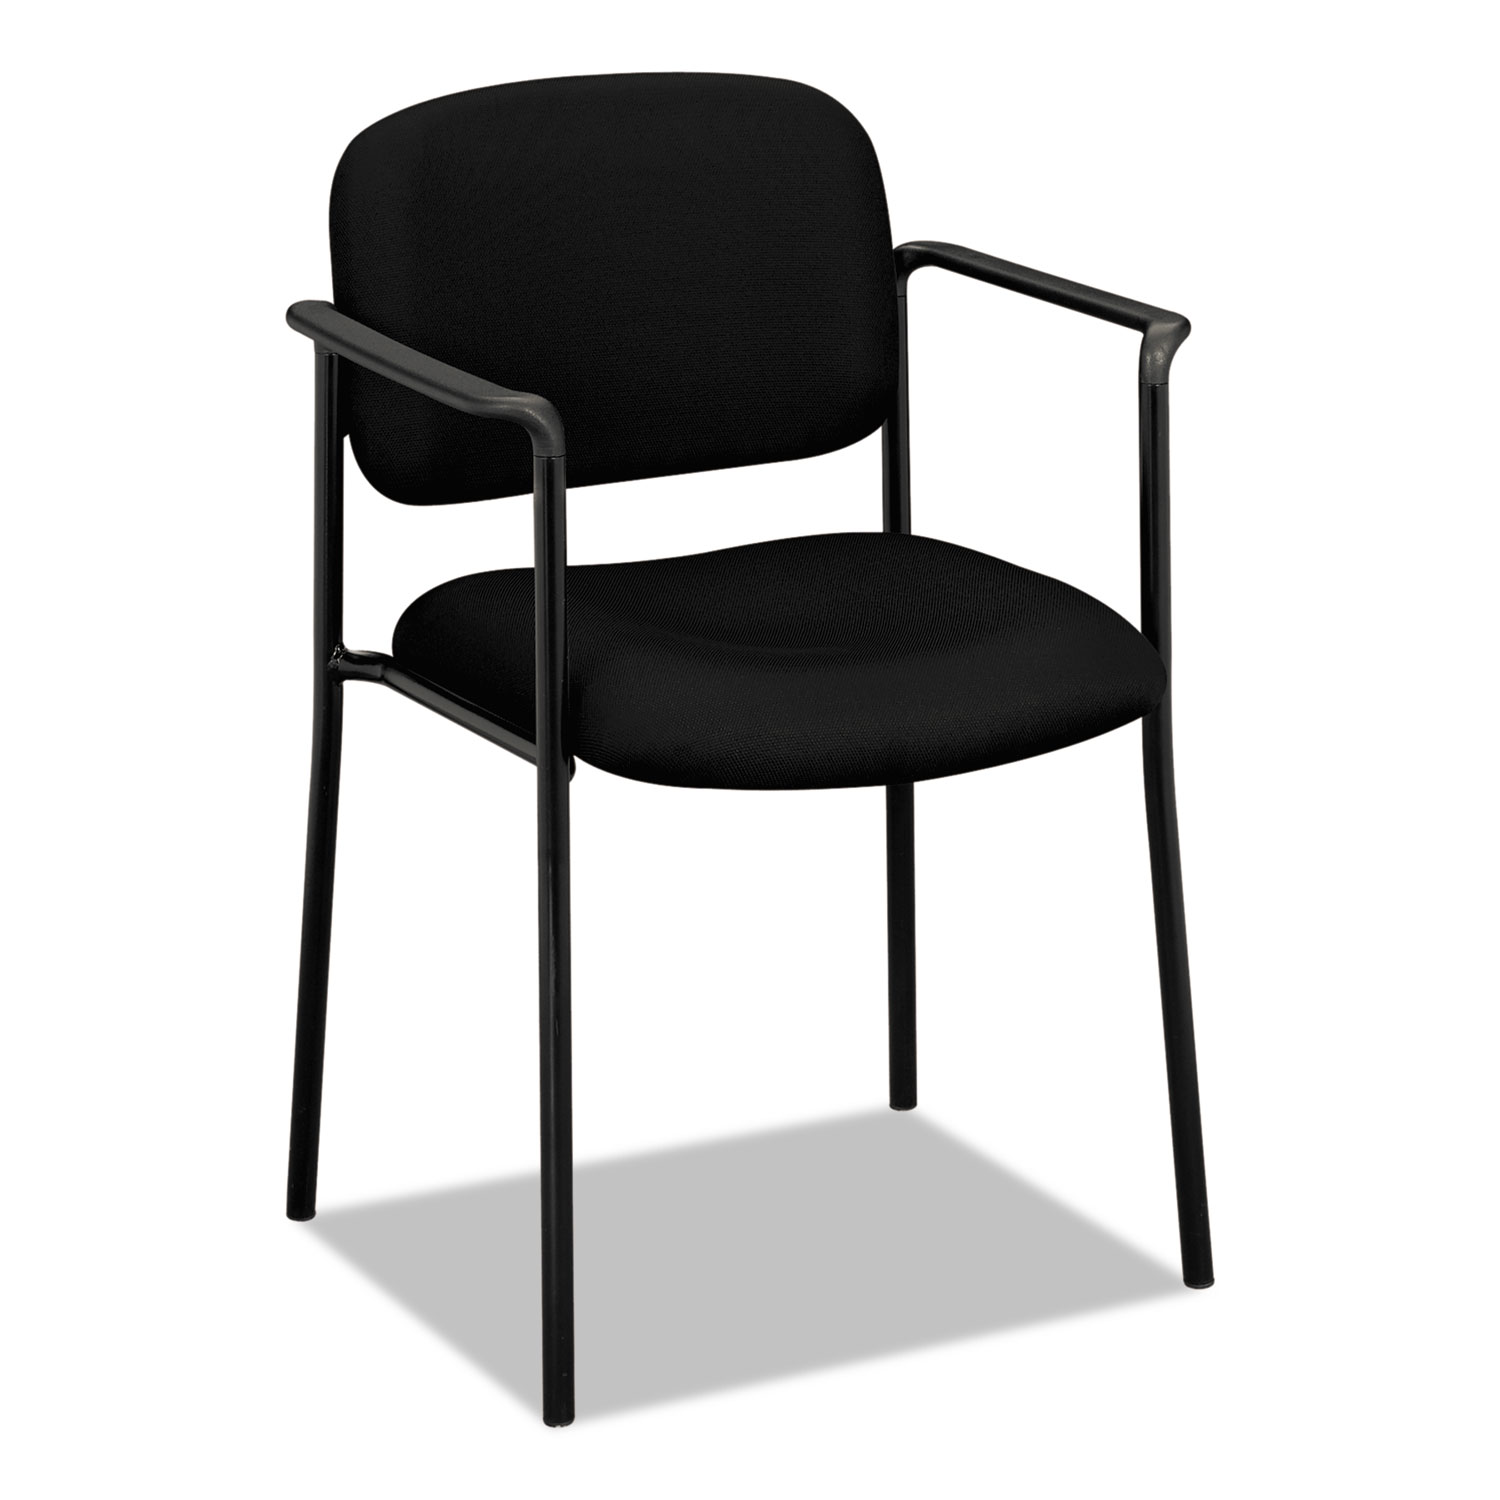  HON HVL616.VA10 VL616 Stacking Guest Chair with Arms, Black Seat/Black Back, Black Base (BSXVL616VA10) 